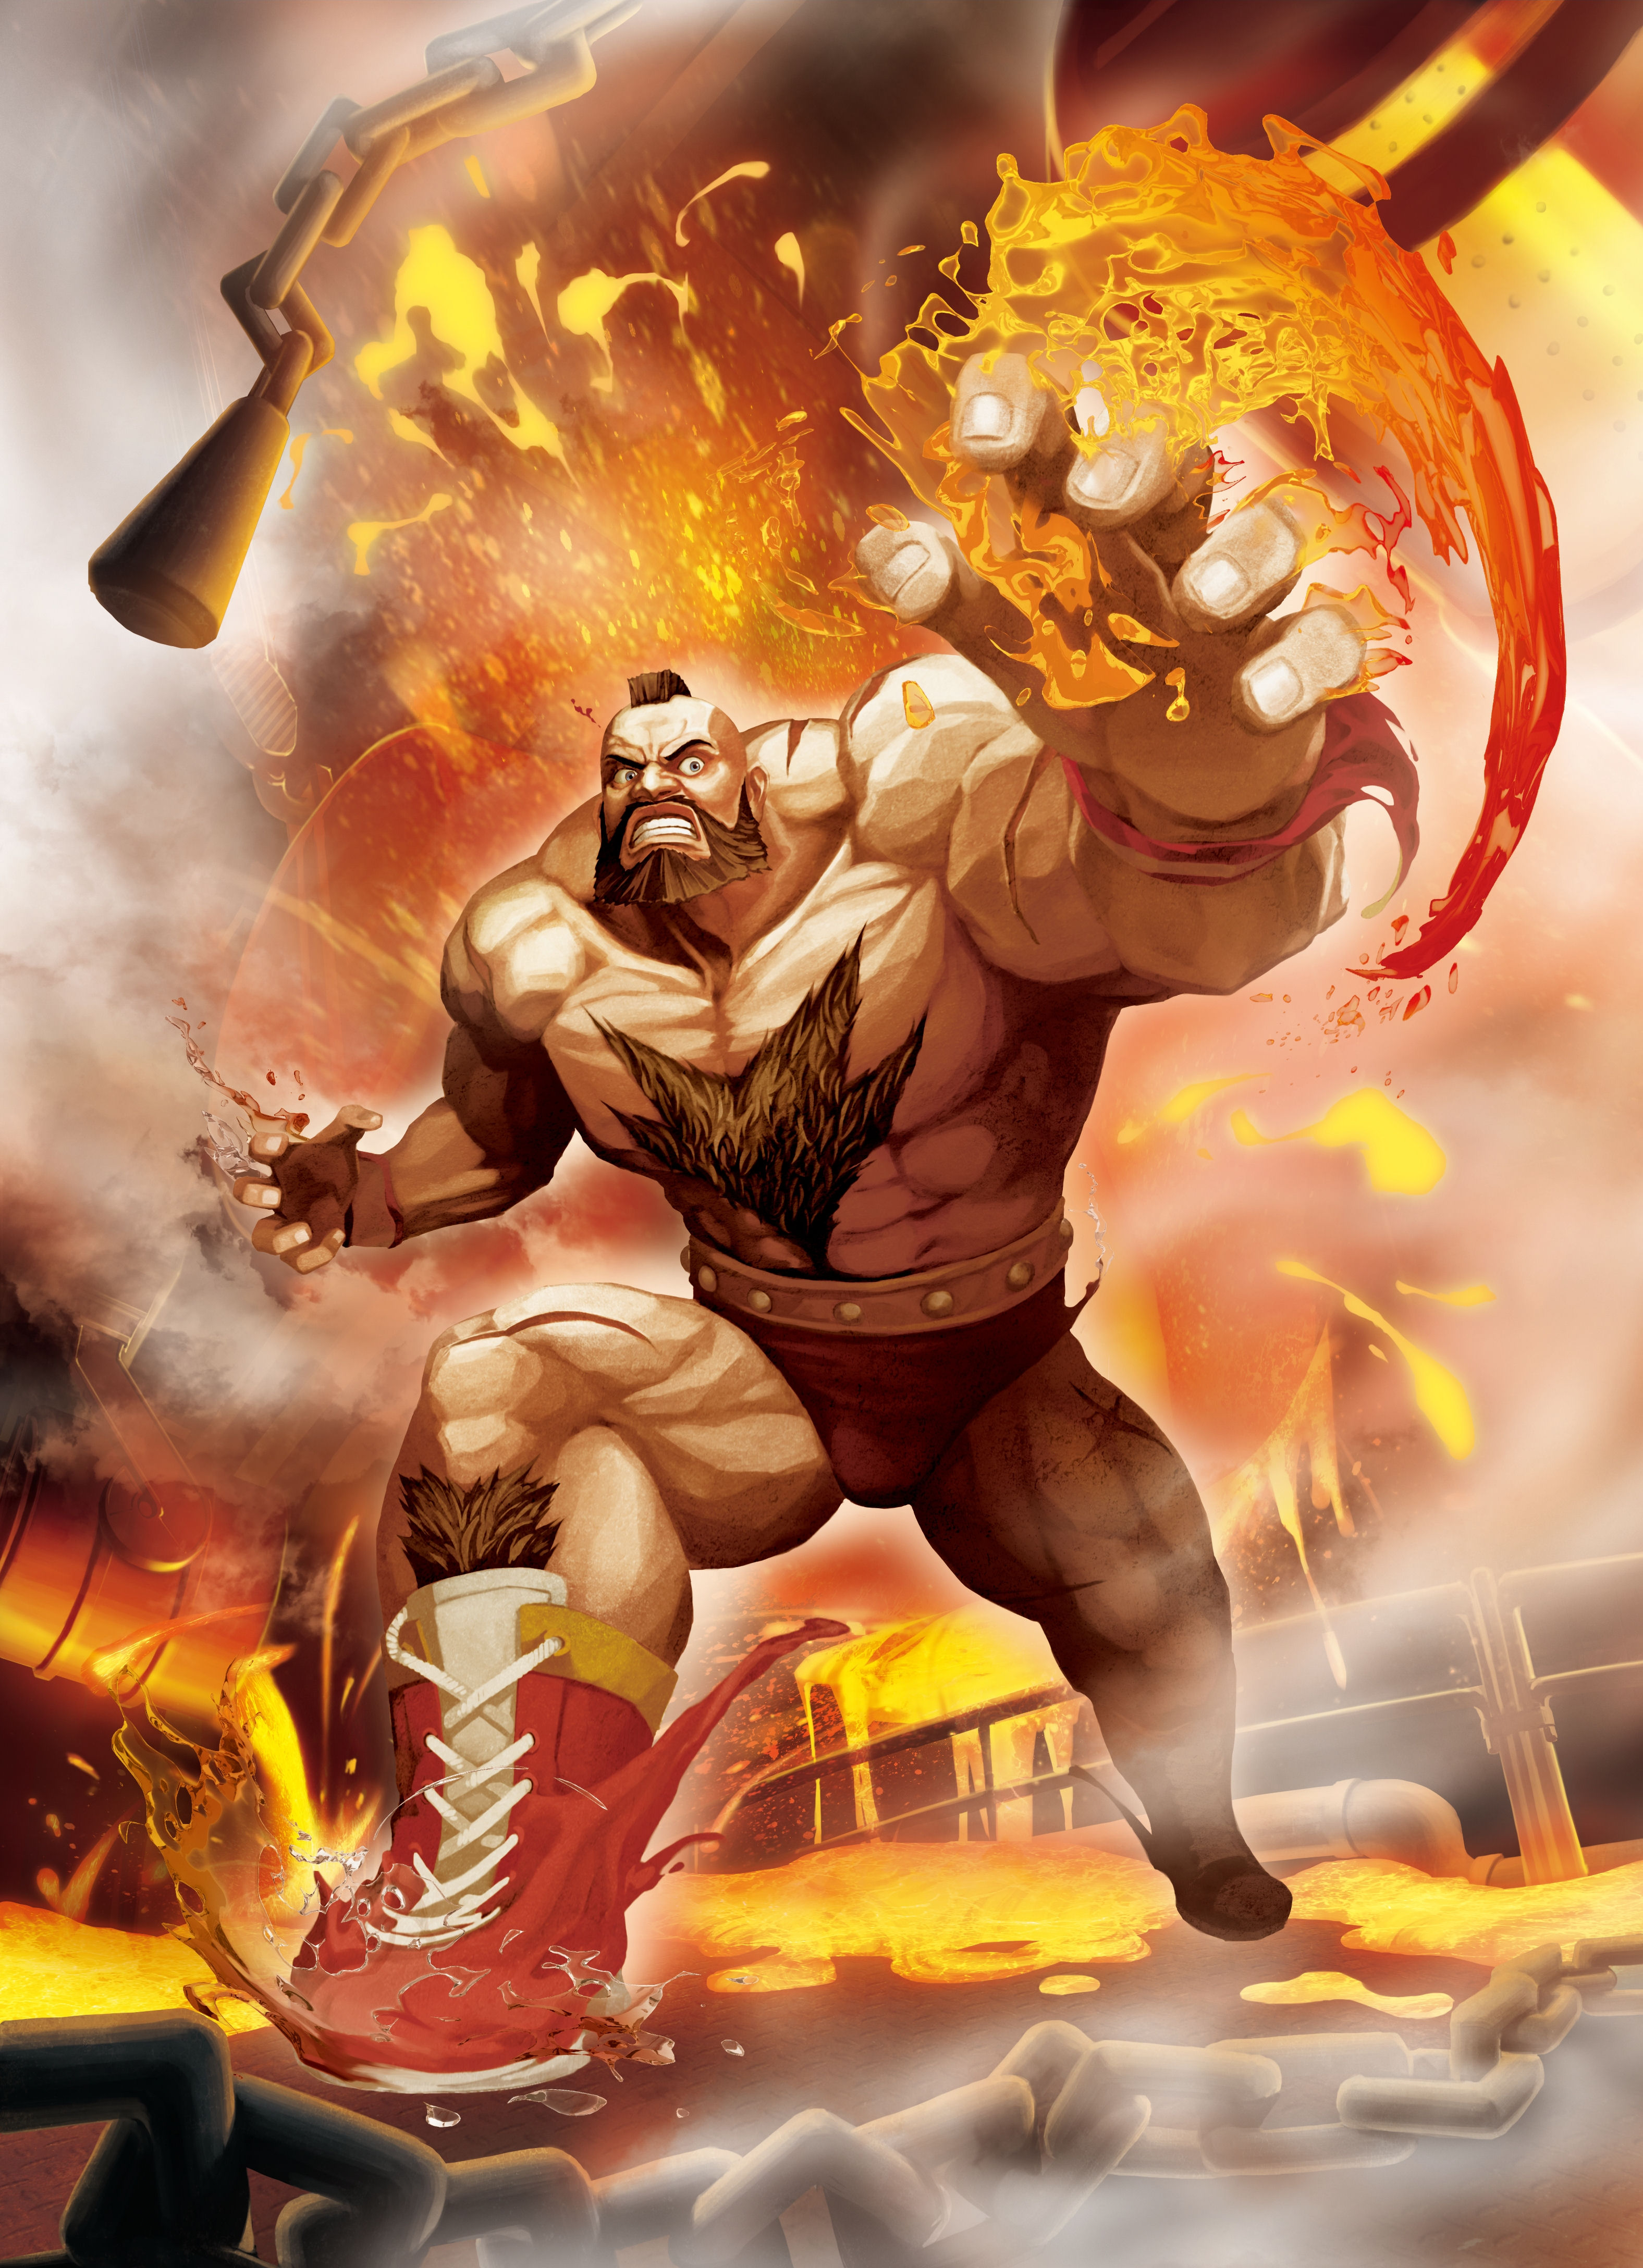 Zangief (Character) - Giant Bomb Street Fighter 2 Zangief.